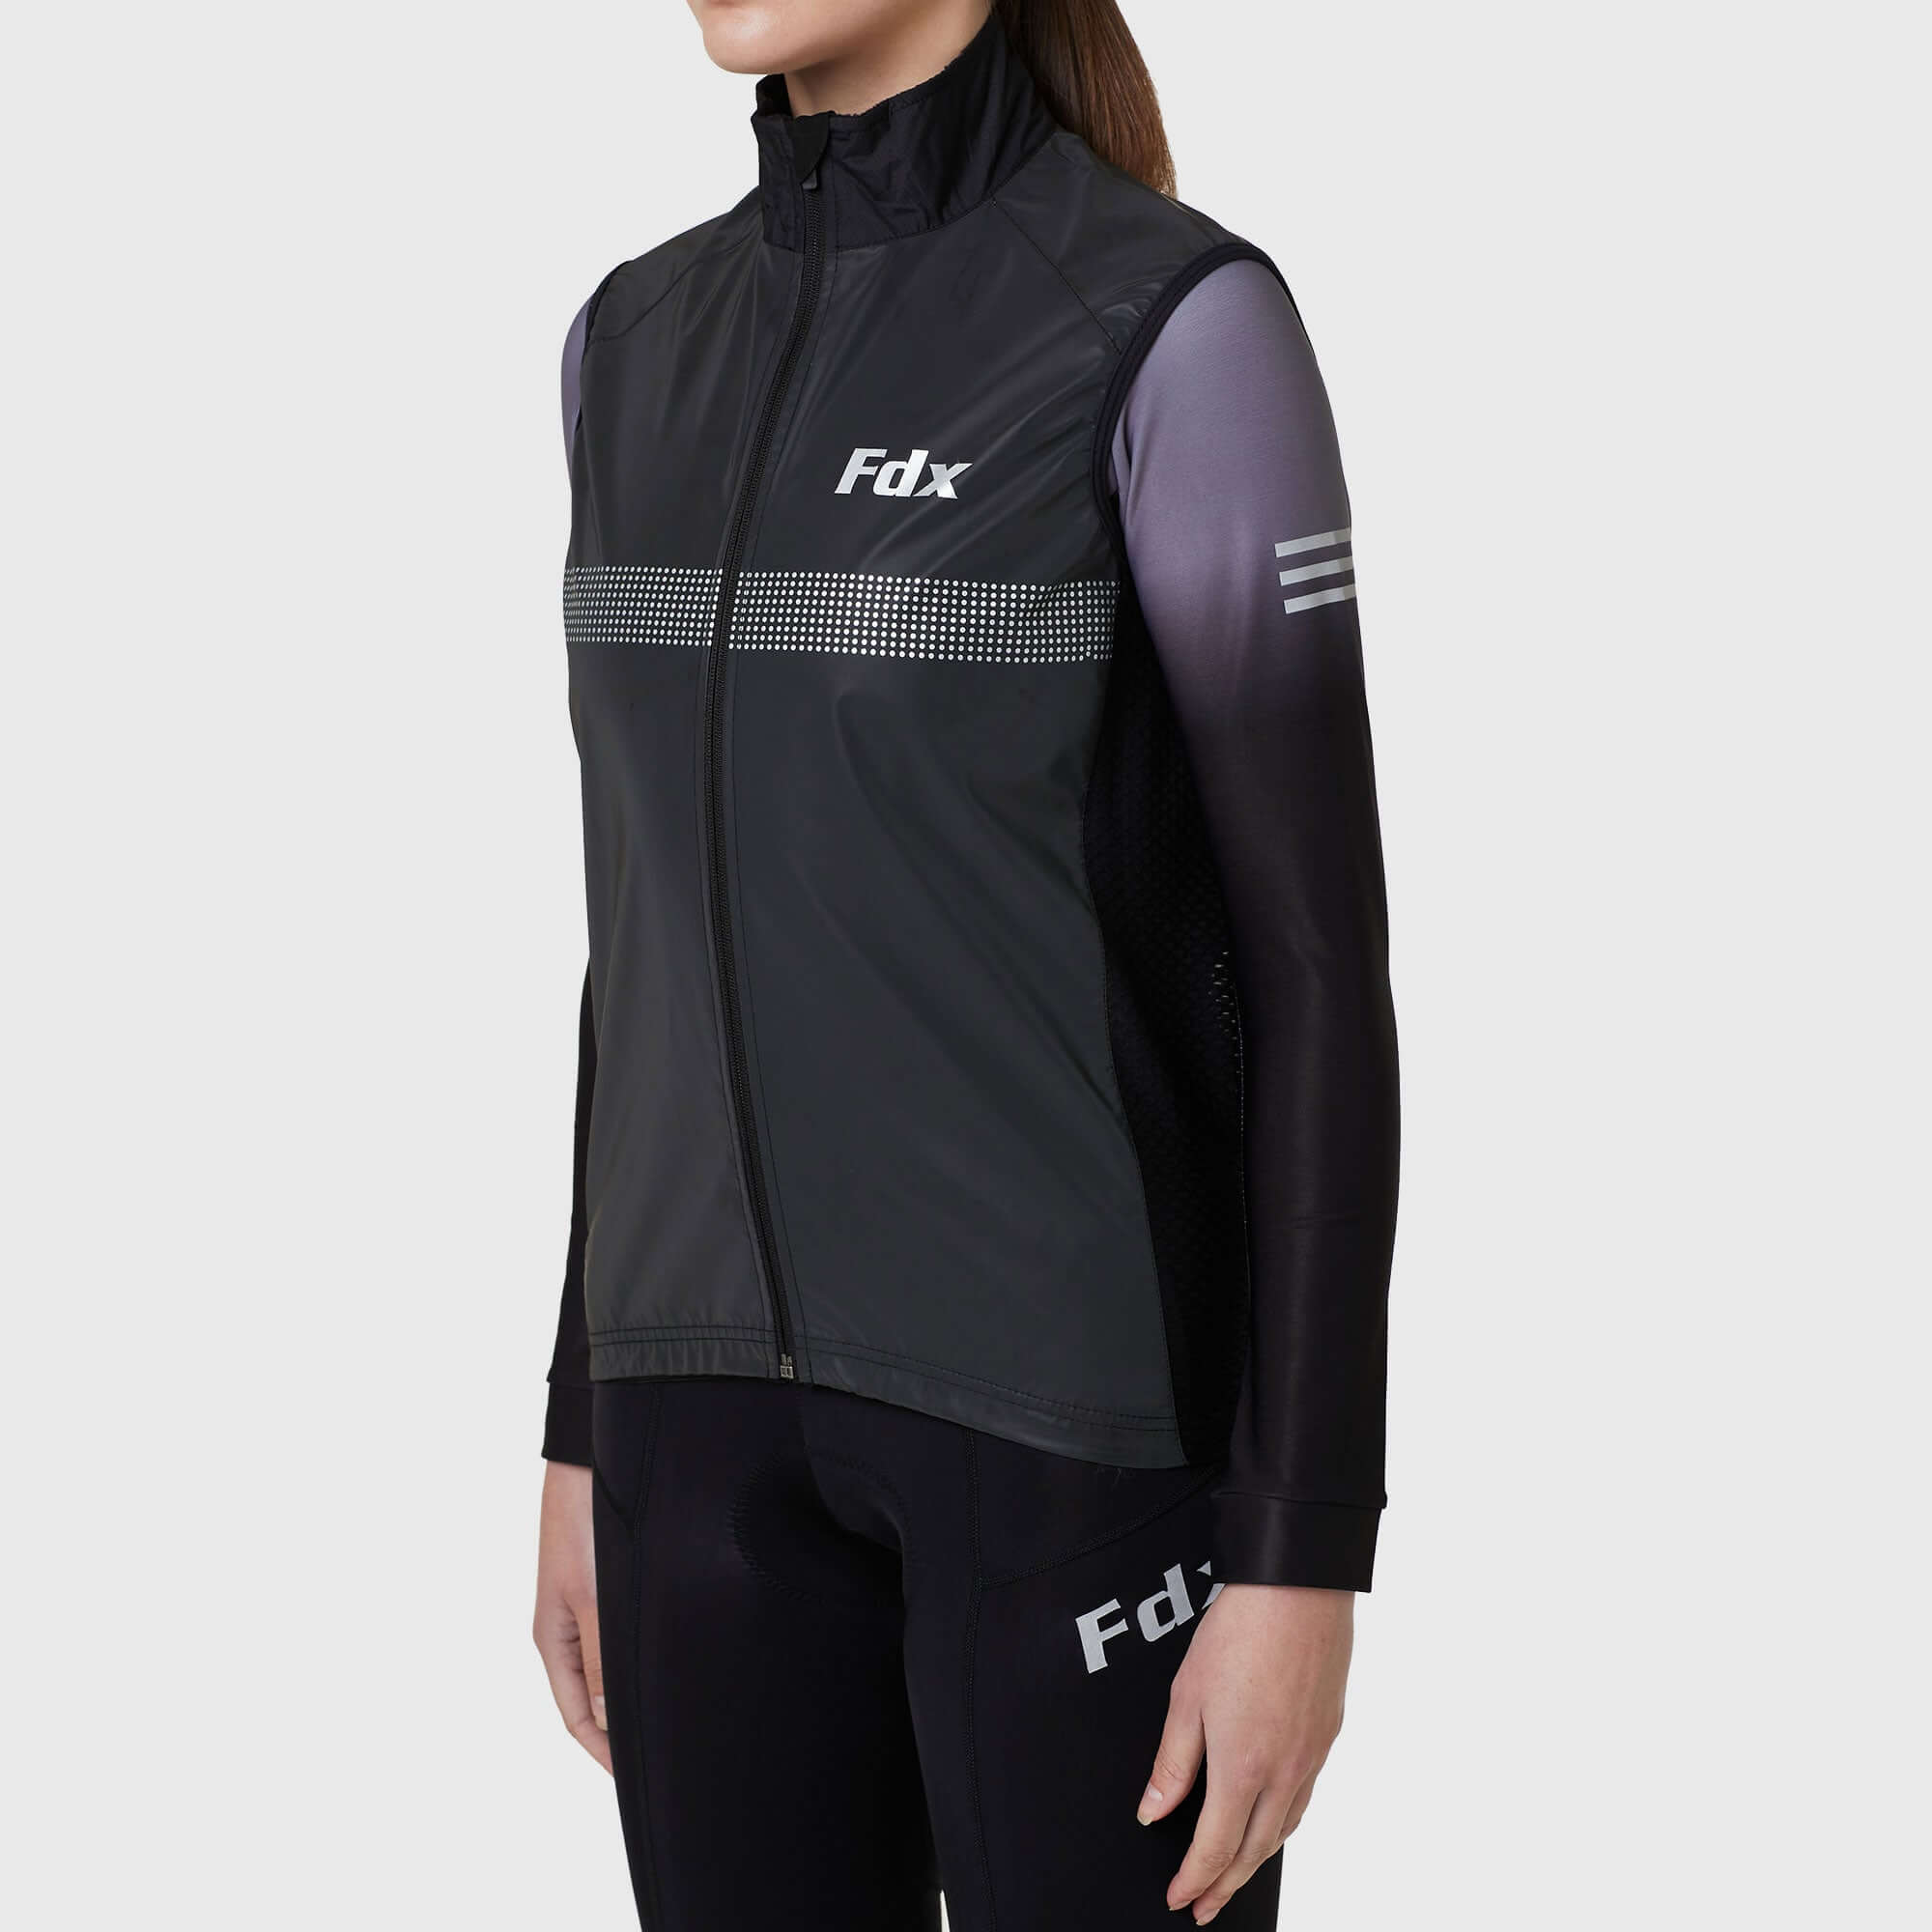 Women’s Best Black hi viz cycling gilet windproof breathable quick dry MTB rain vest, lightweight packable 360 reflective rain top for riding